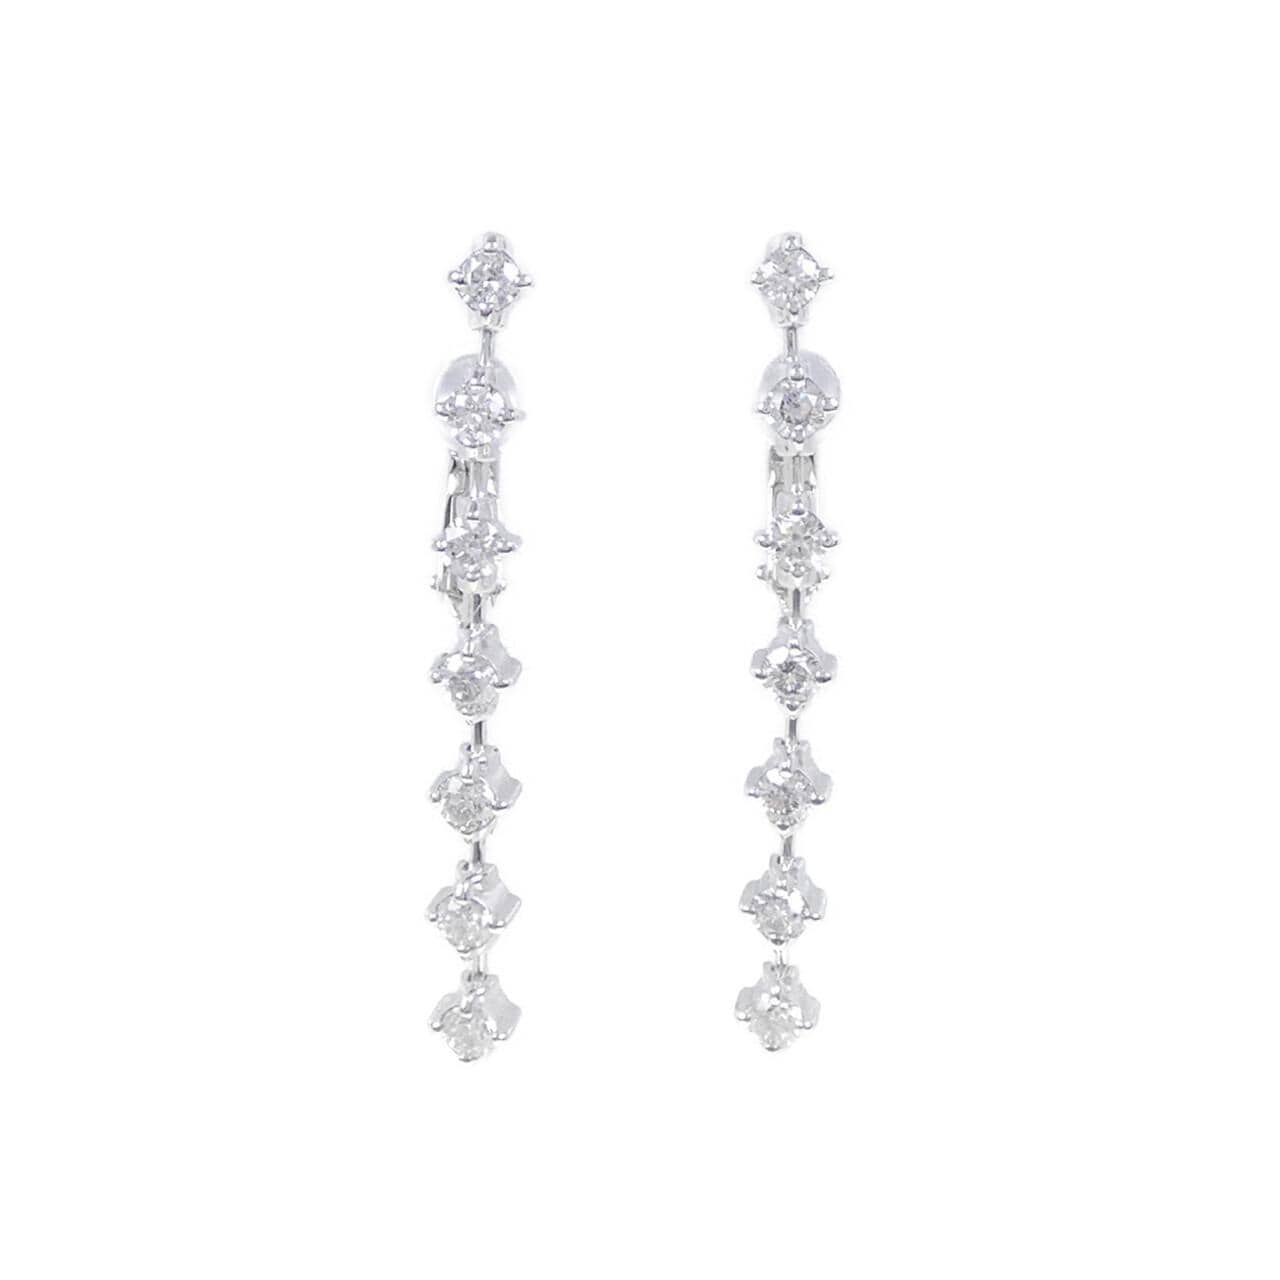 K18WG Diamond earrings 1.00CT